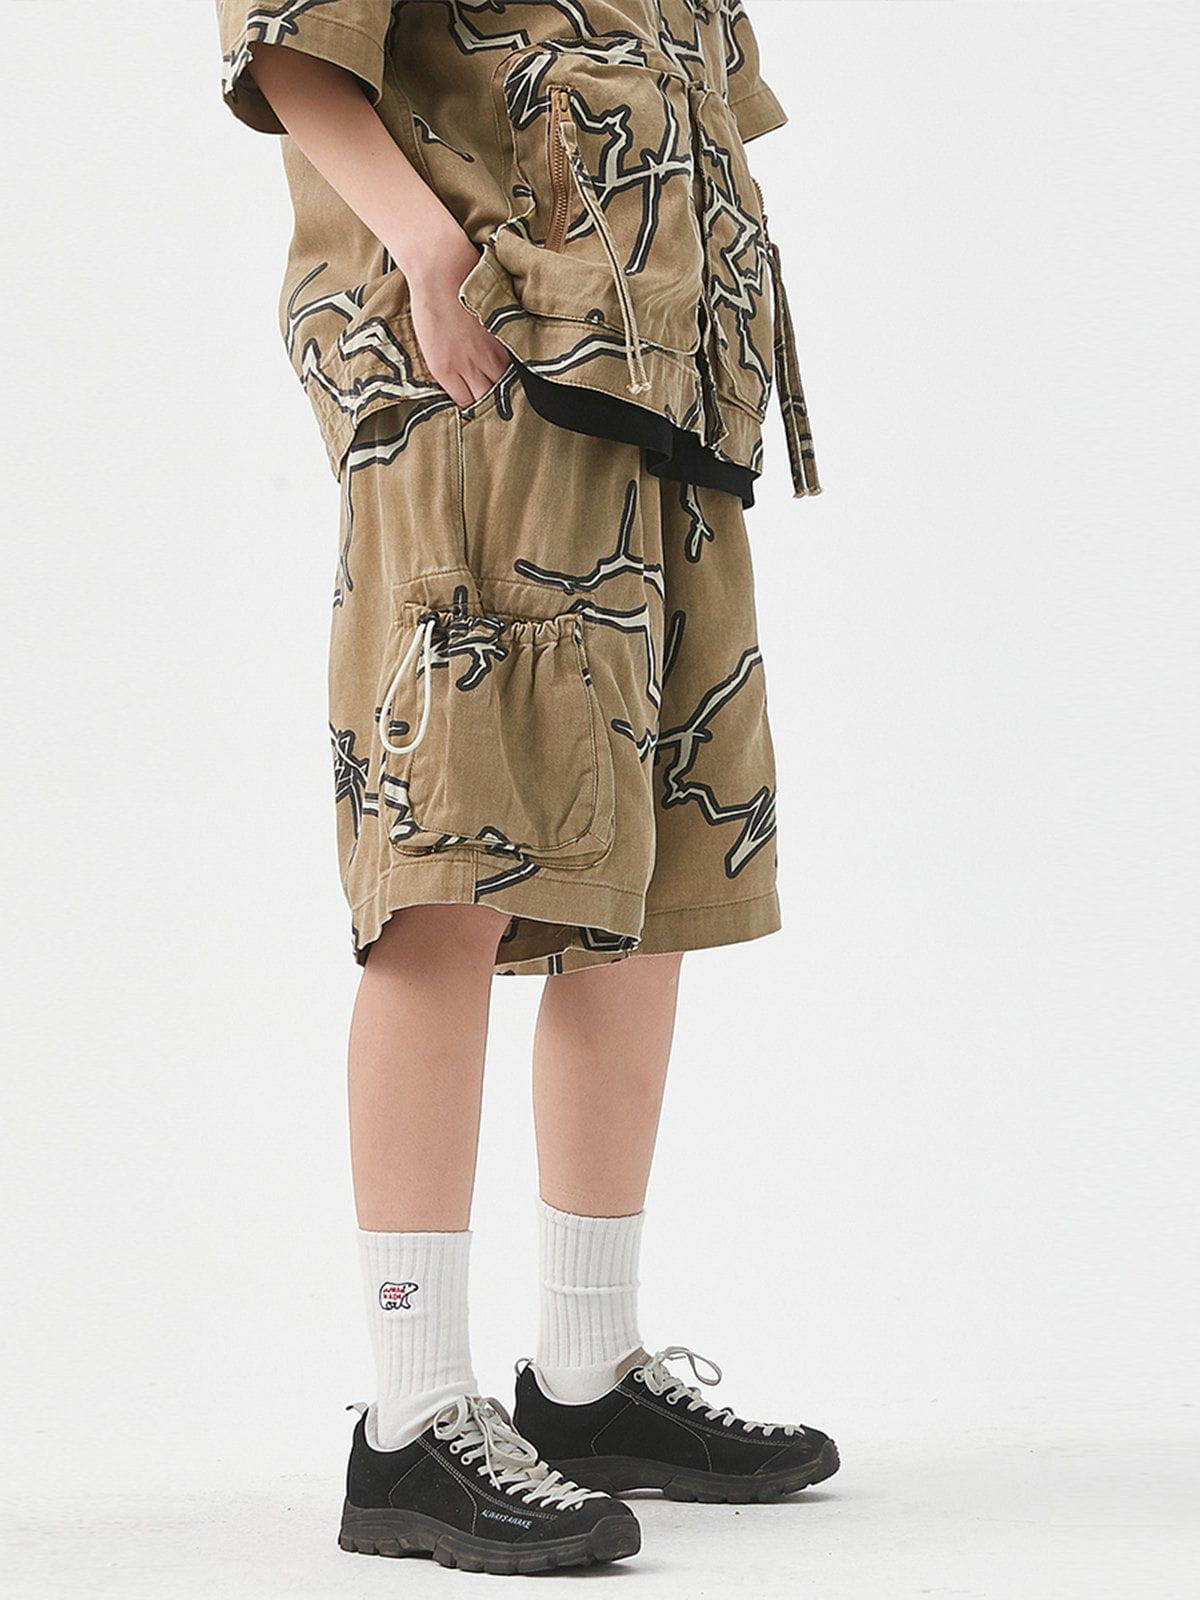 Majesda® - Multiple Pockets Drawstring Shorts outfit ideas streetwear fashion